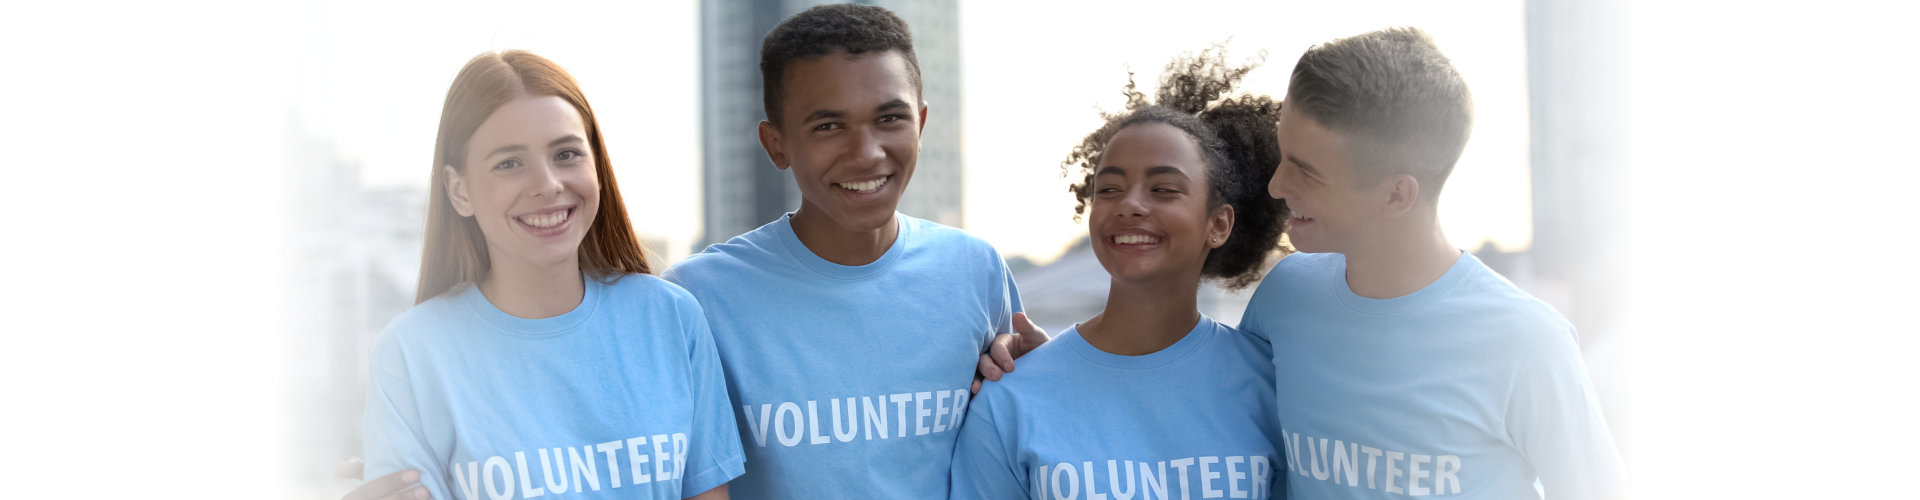 smiling teen group in volunteer t-shirts